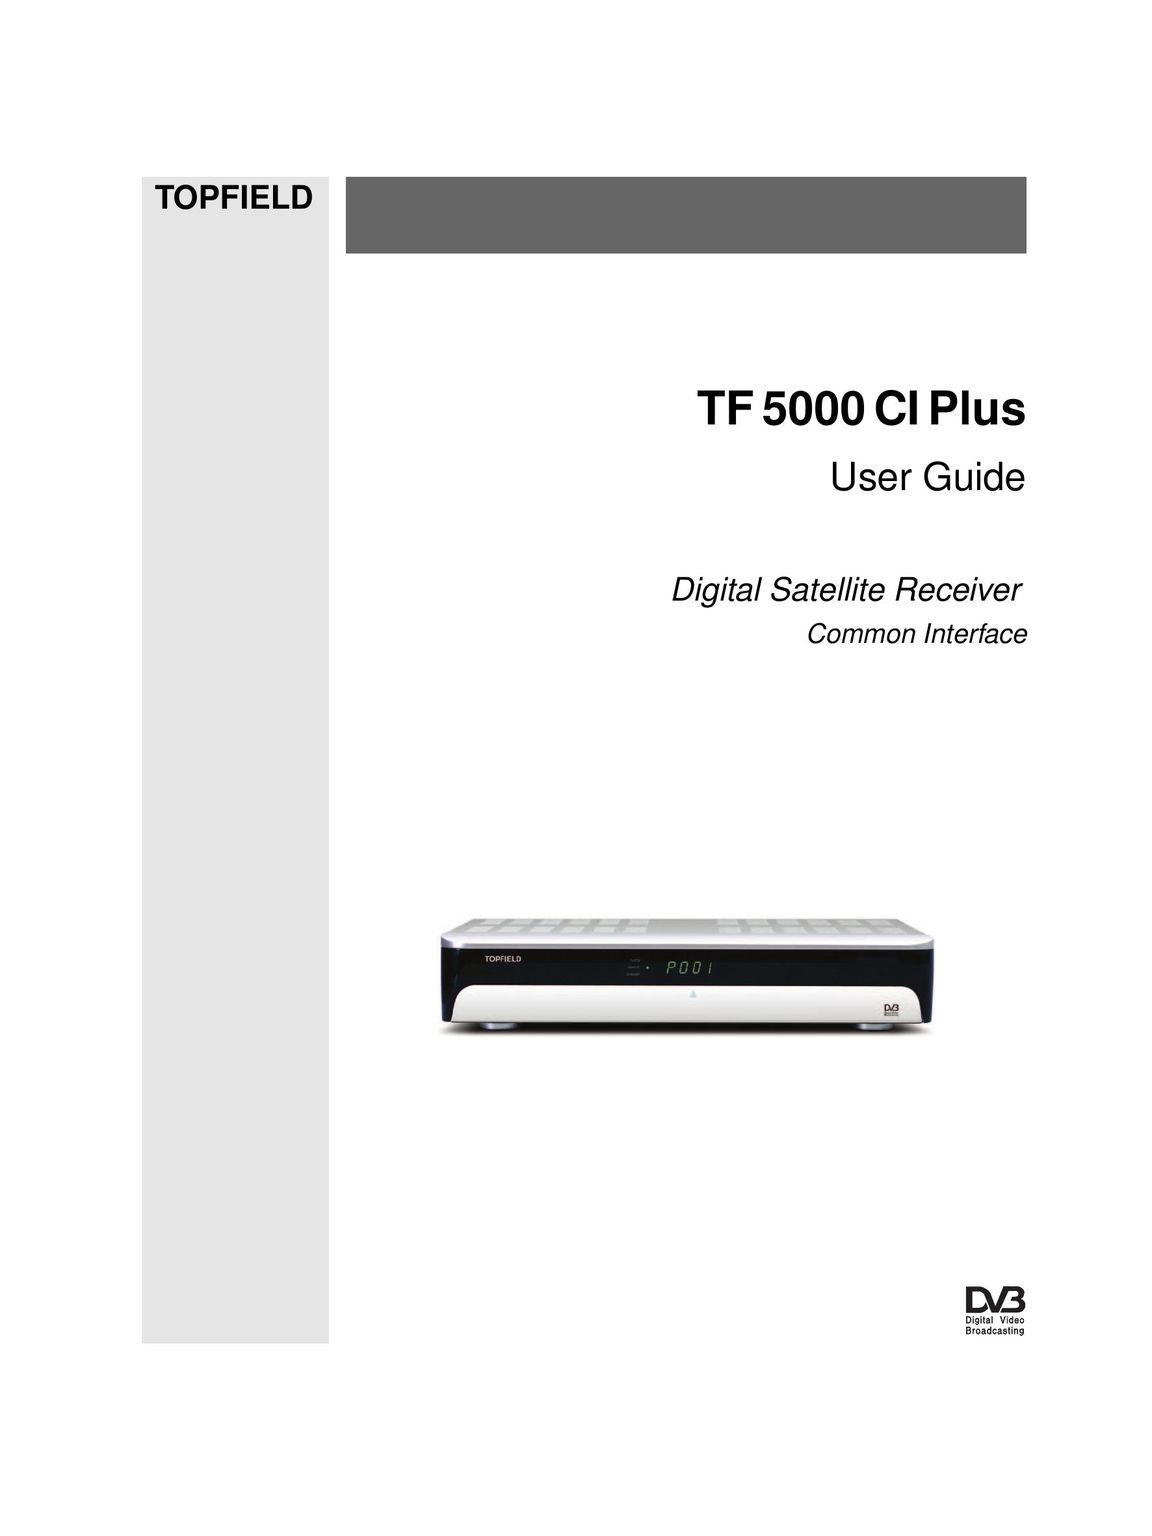 Topfield TF 5000 Cl Plus Satellite TV System User Manual